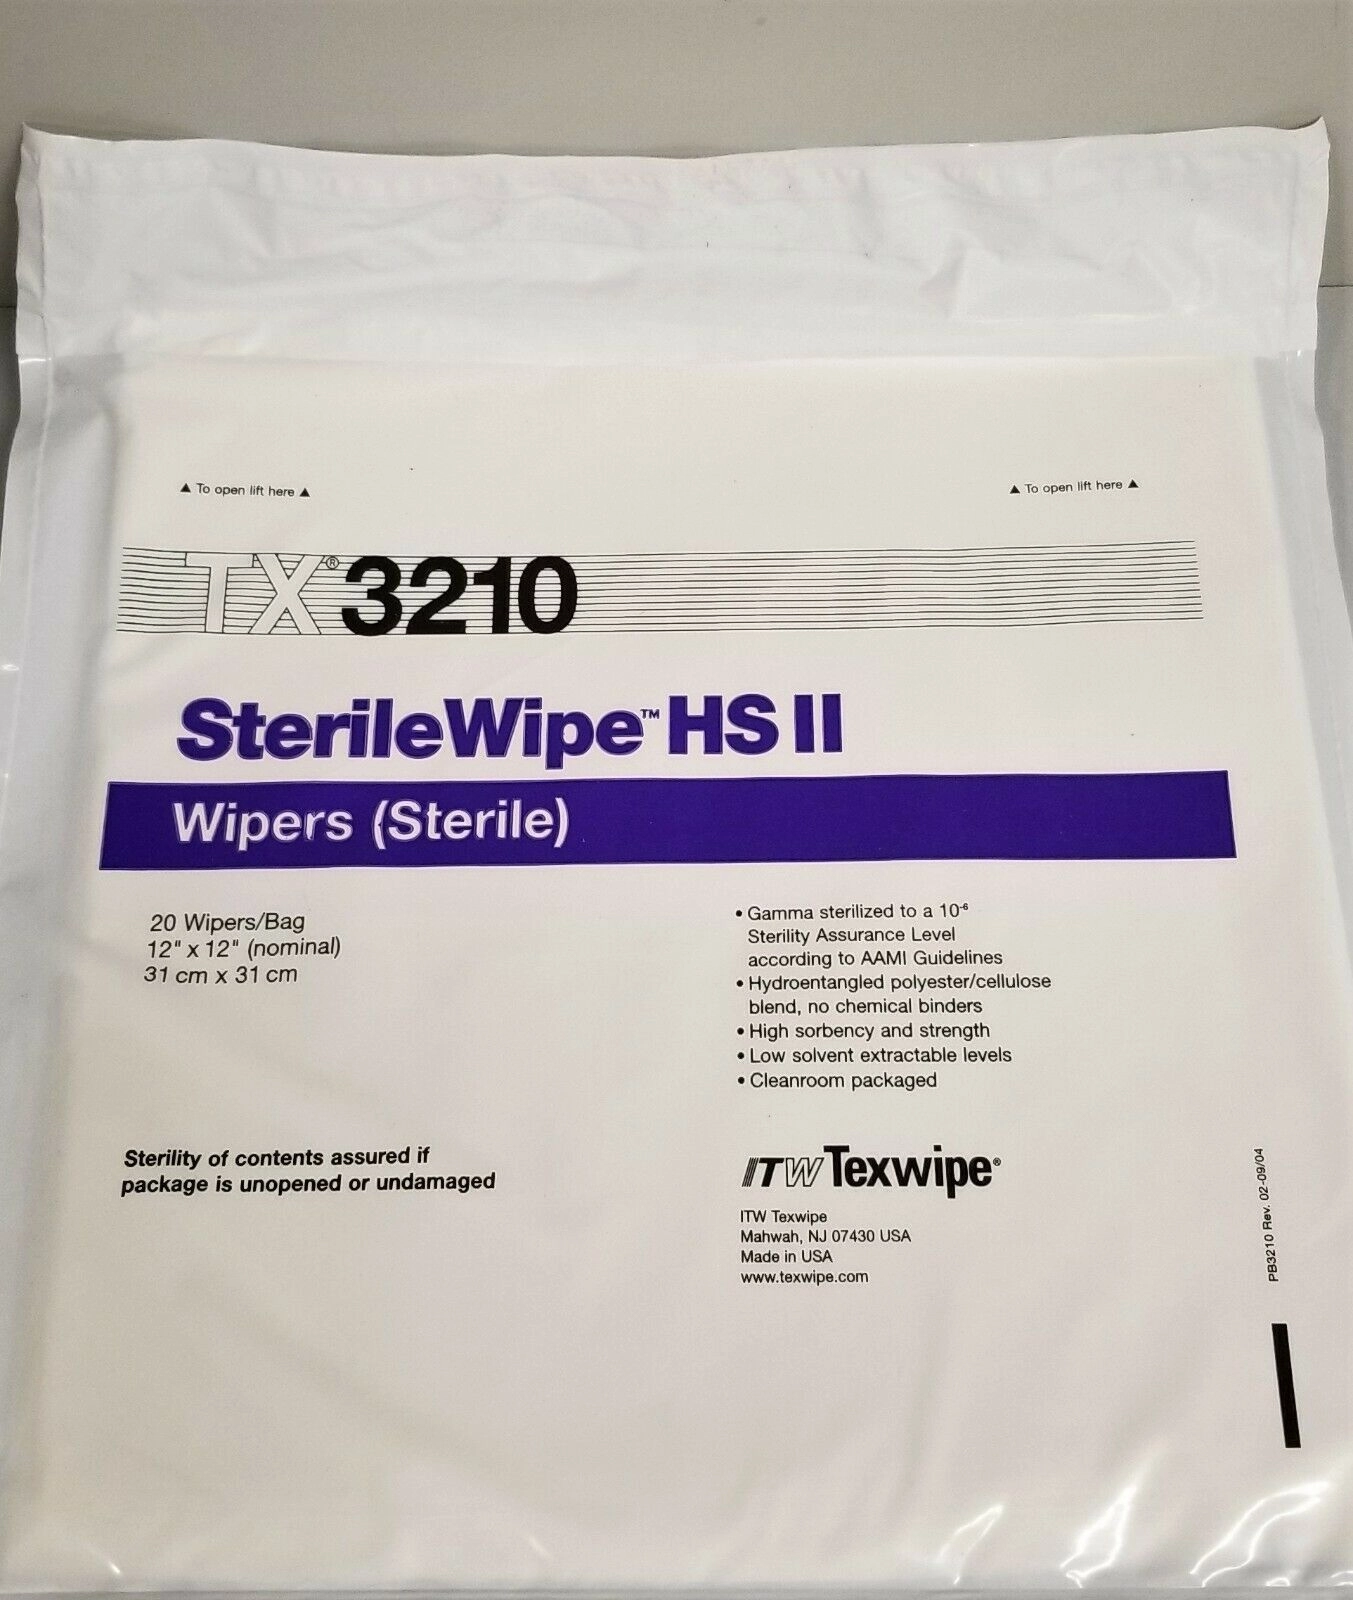 ITW Texwipe SterilWipe HS II TX3210 Sterile Wipers - 12" x 12" (Pack of 20 Wipes)